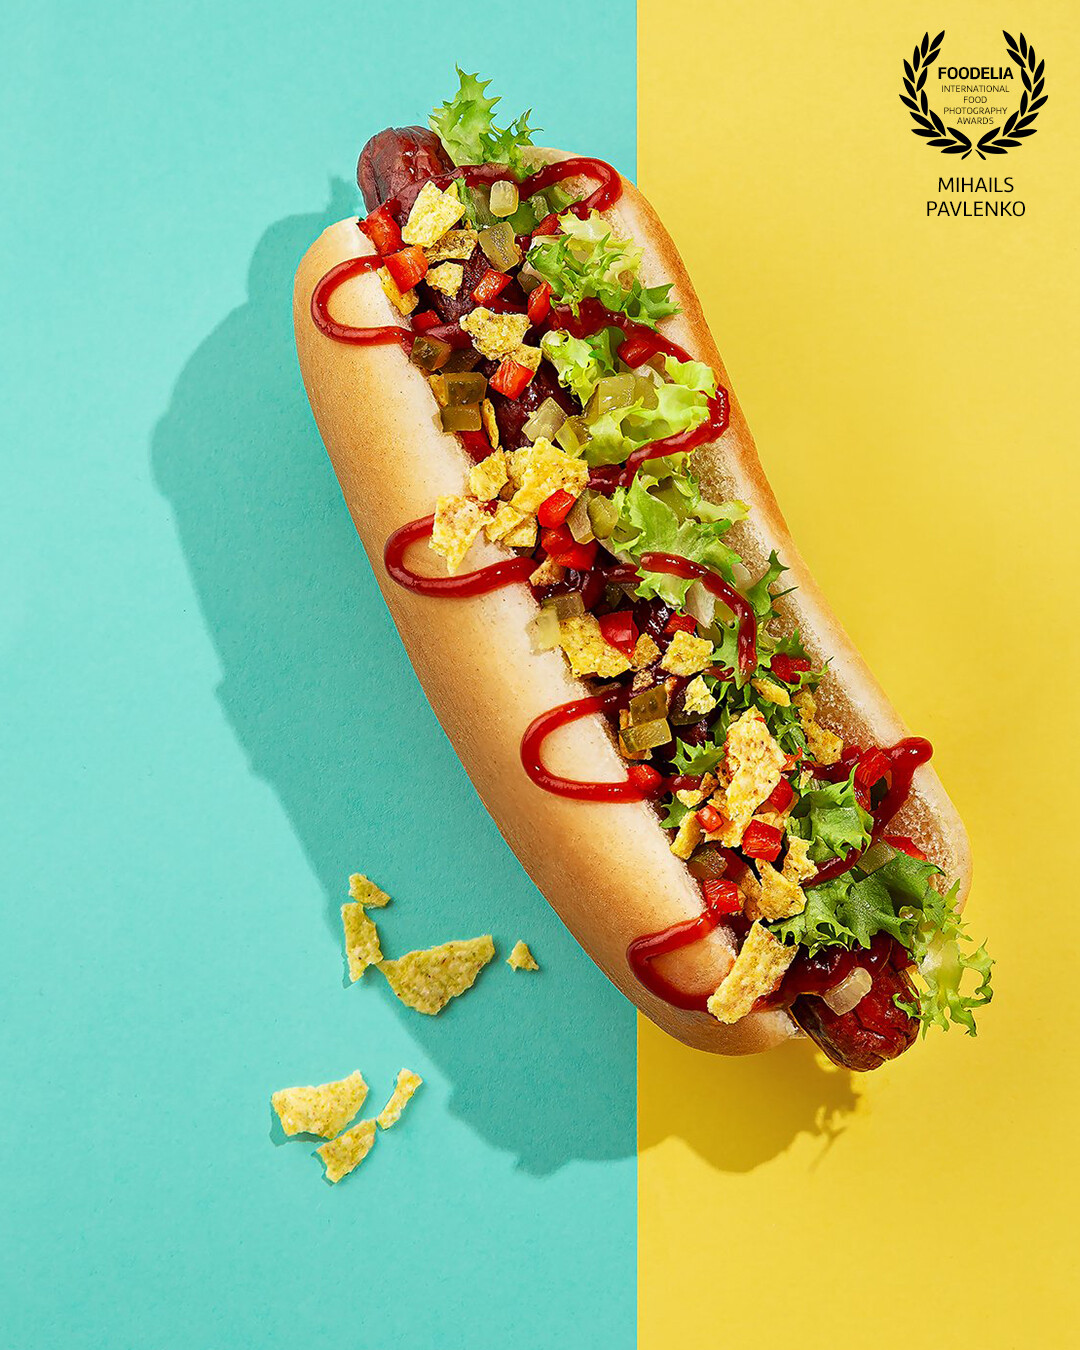 New concept of hot dog with Latvian products @fazerlatvija and @rimi.latvija